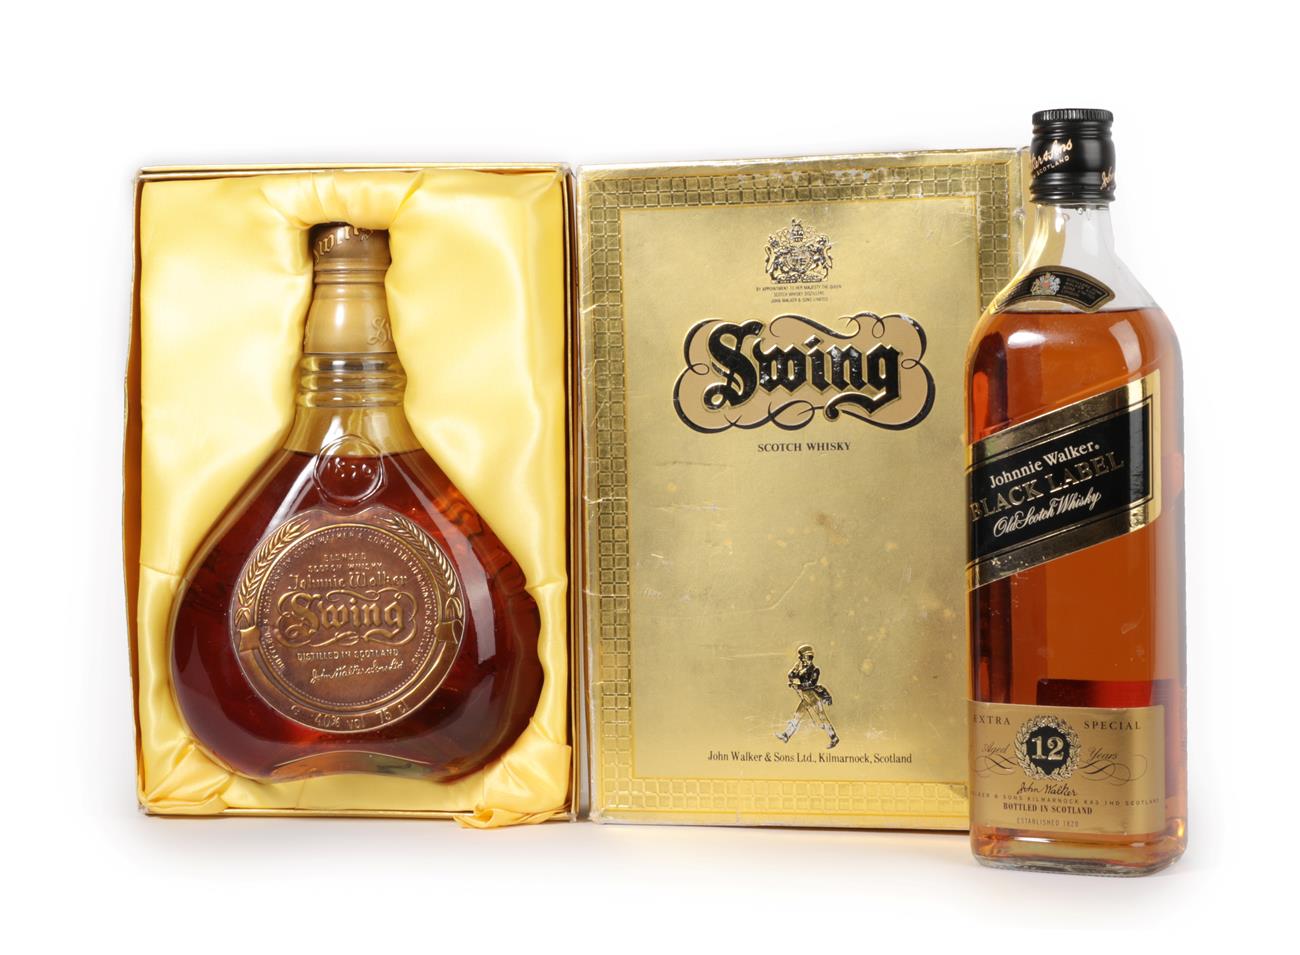 Johnnie Walker ''Swing'' Blended Scotch Whisky, 40% vol 75cl, in presentation bottle and original - Image 3 of 3